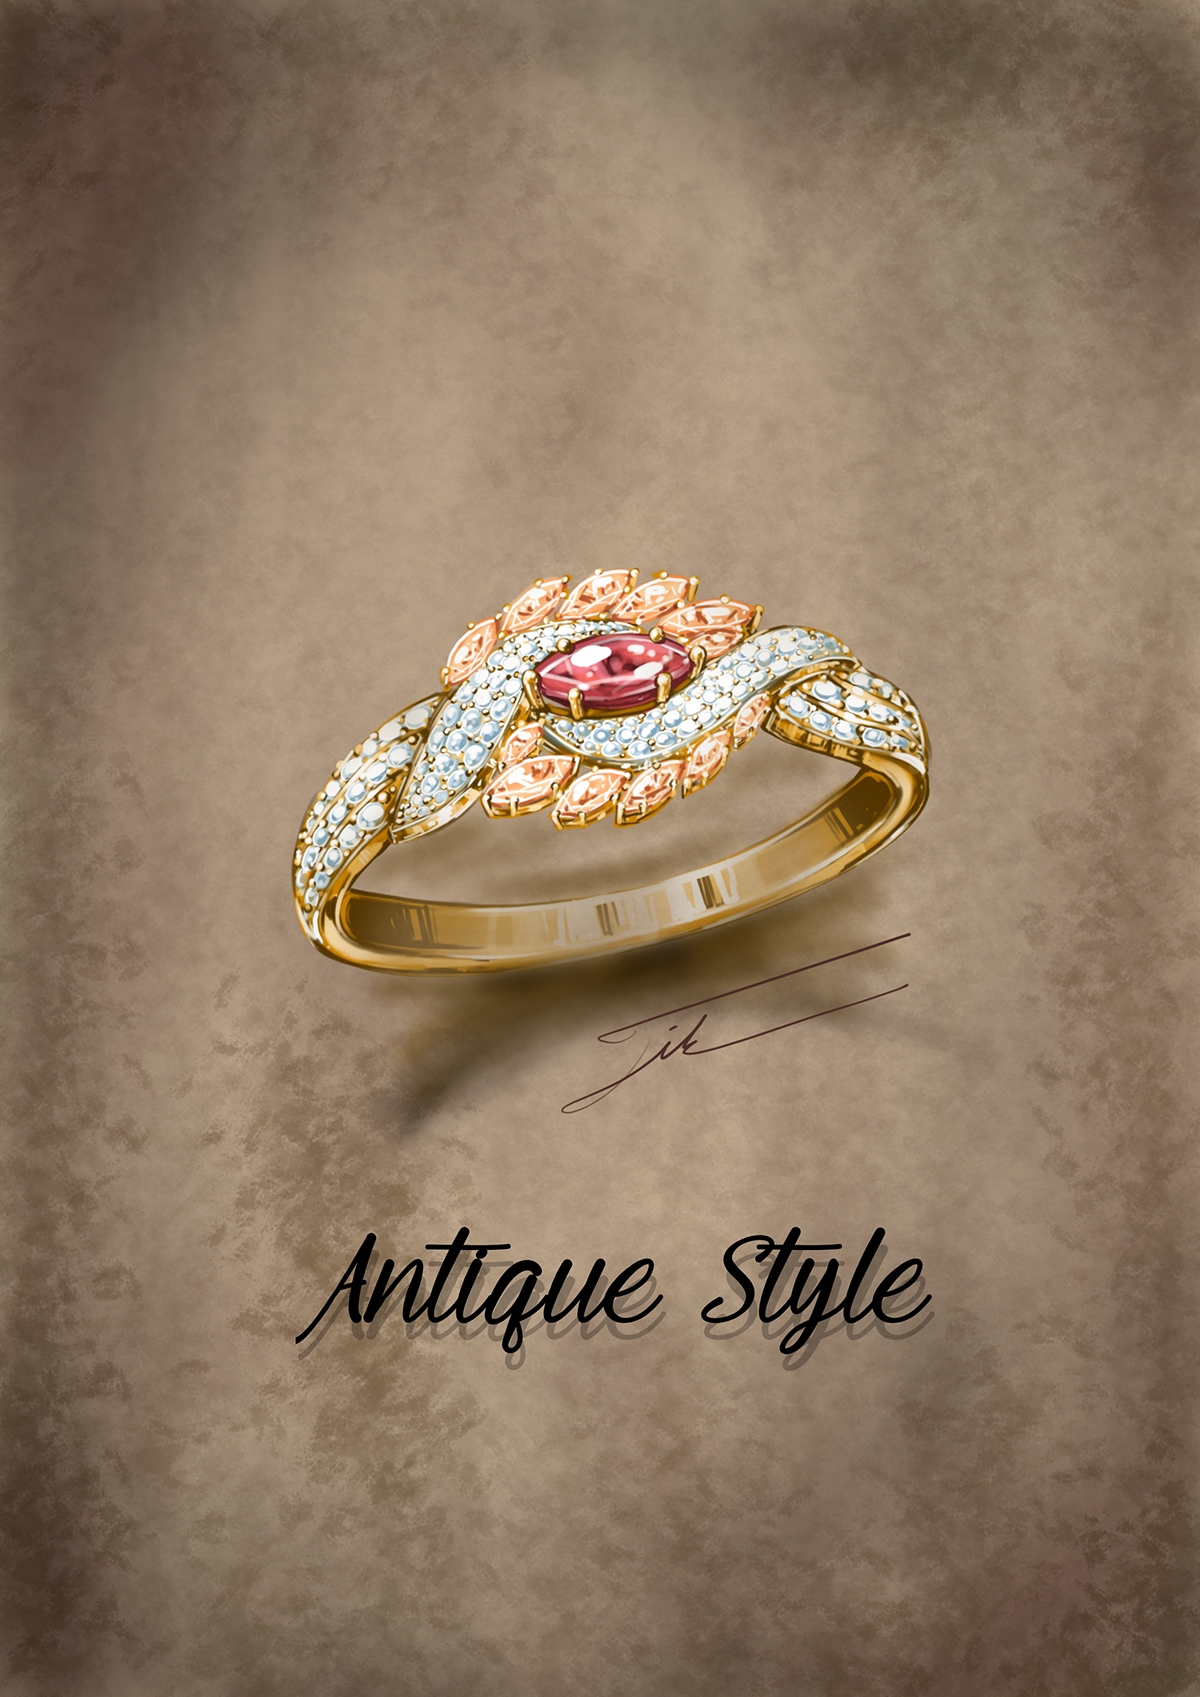 antique jewelry gold color stone Gems diamonds ring wacom Cintiq